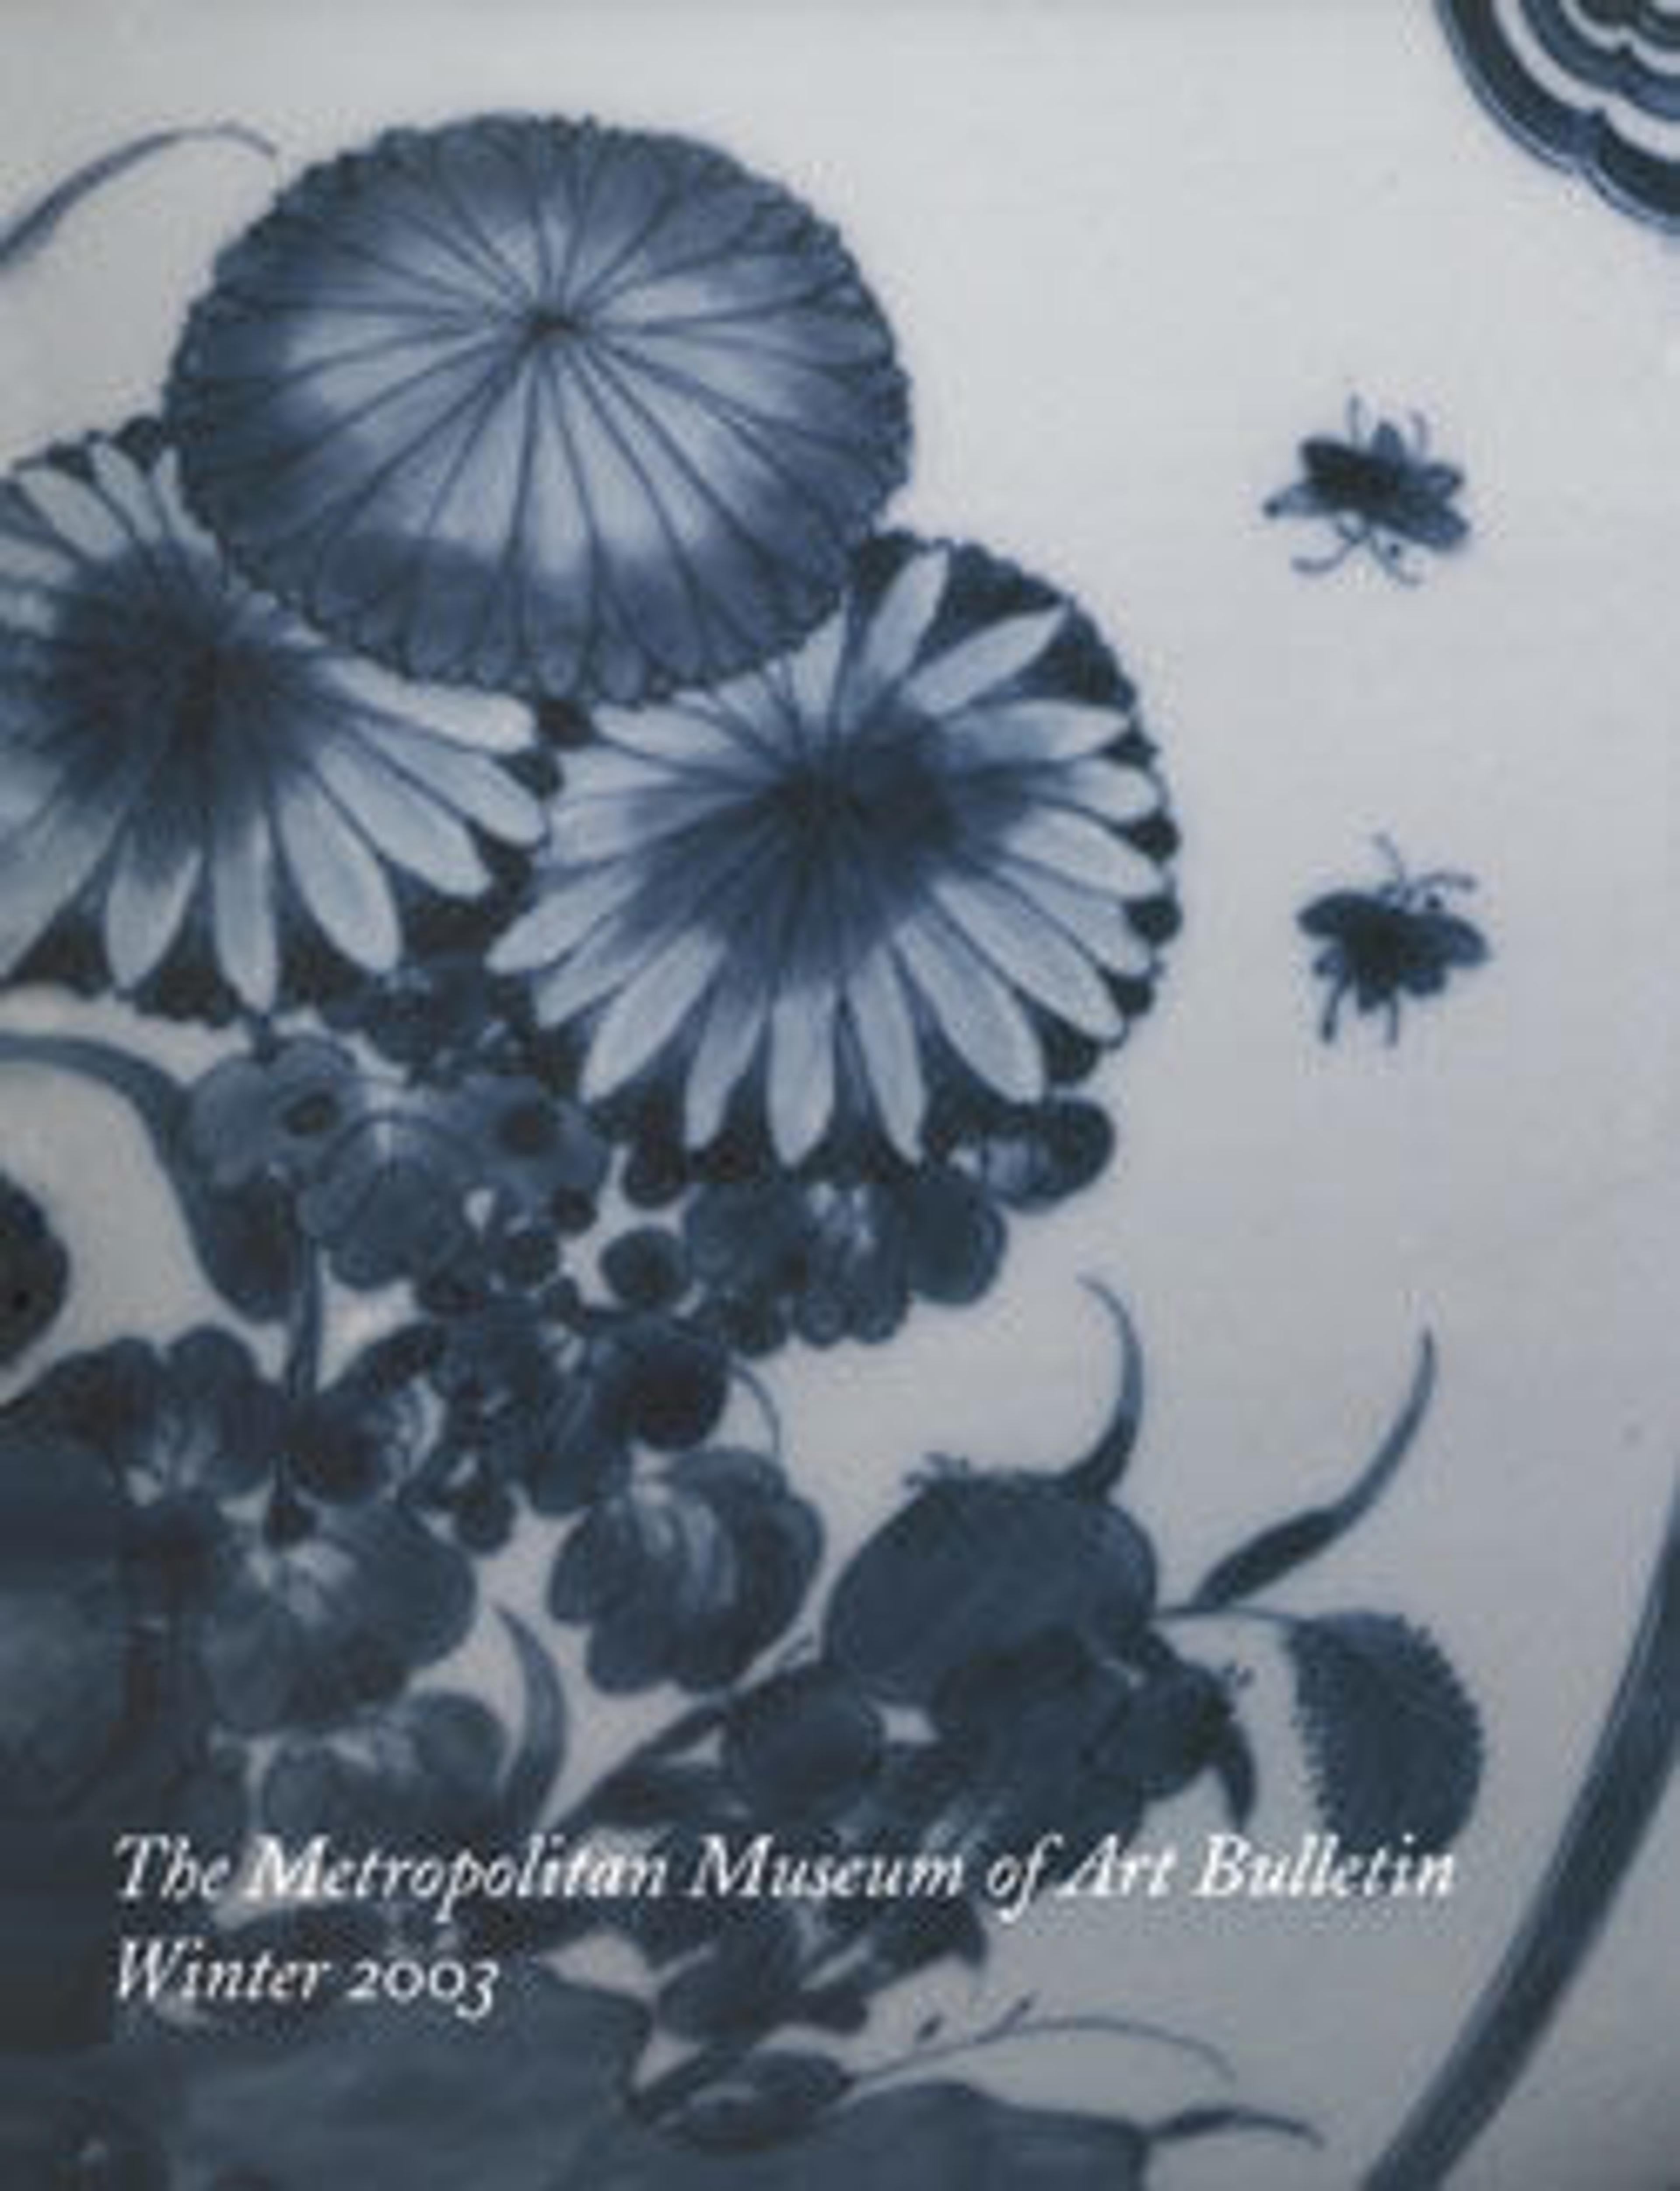 "Chinese Export Porcelain": The Metropolitan Museum of Art Bulletin, v. 60 no. 3 (Winter, 2003)